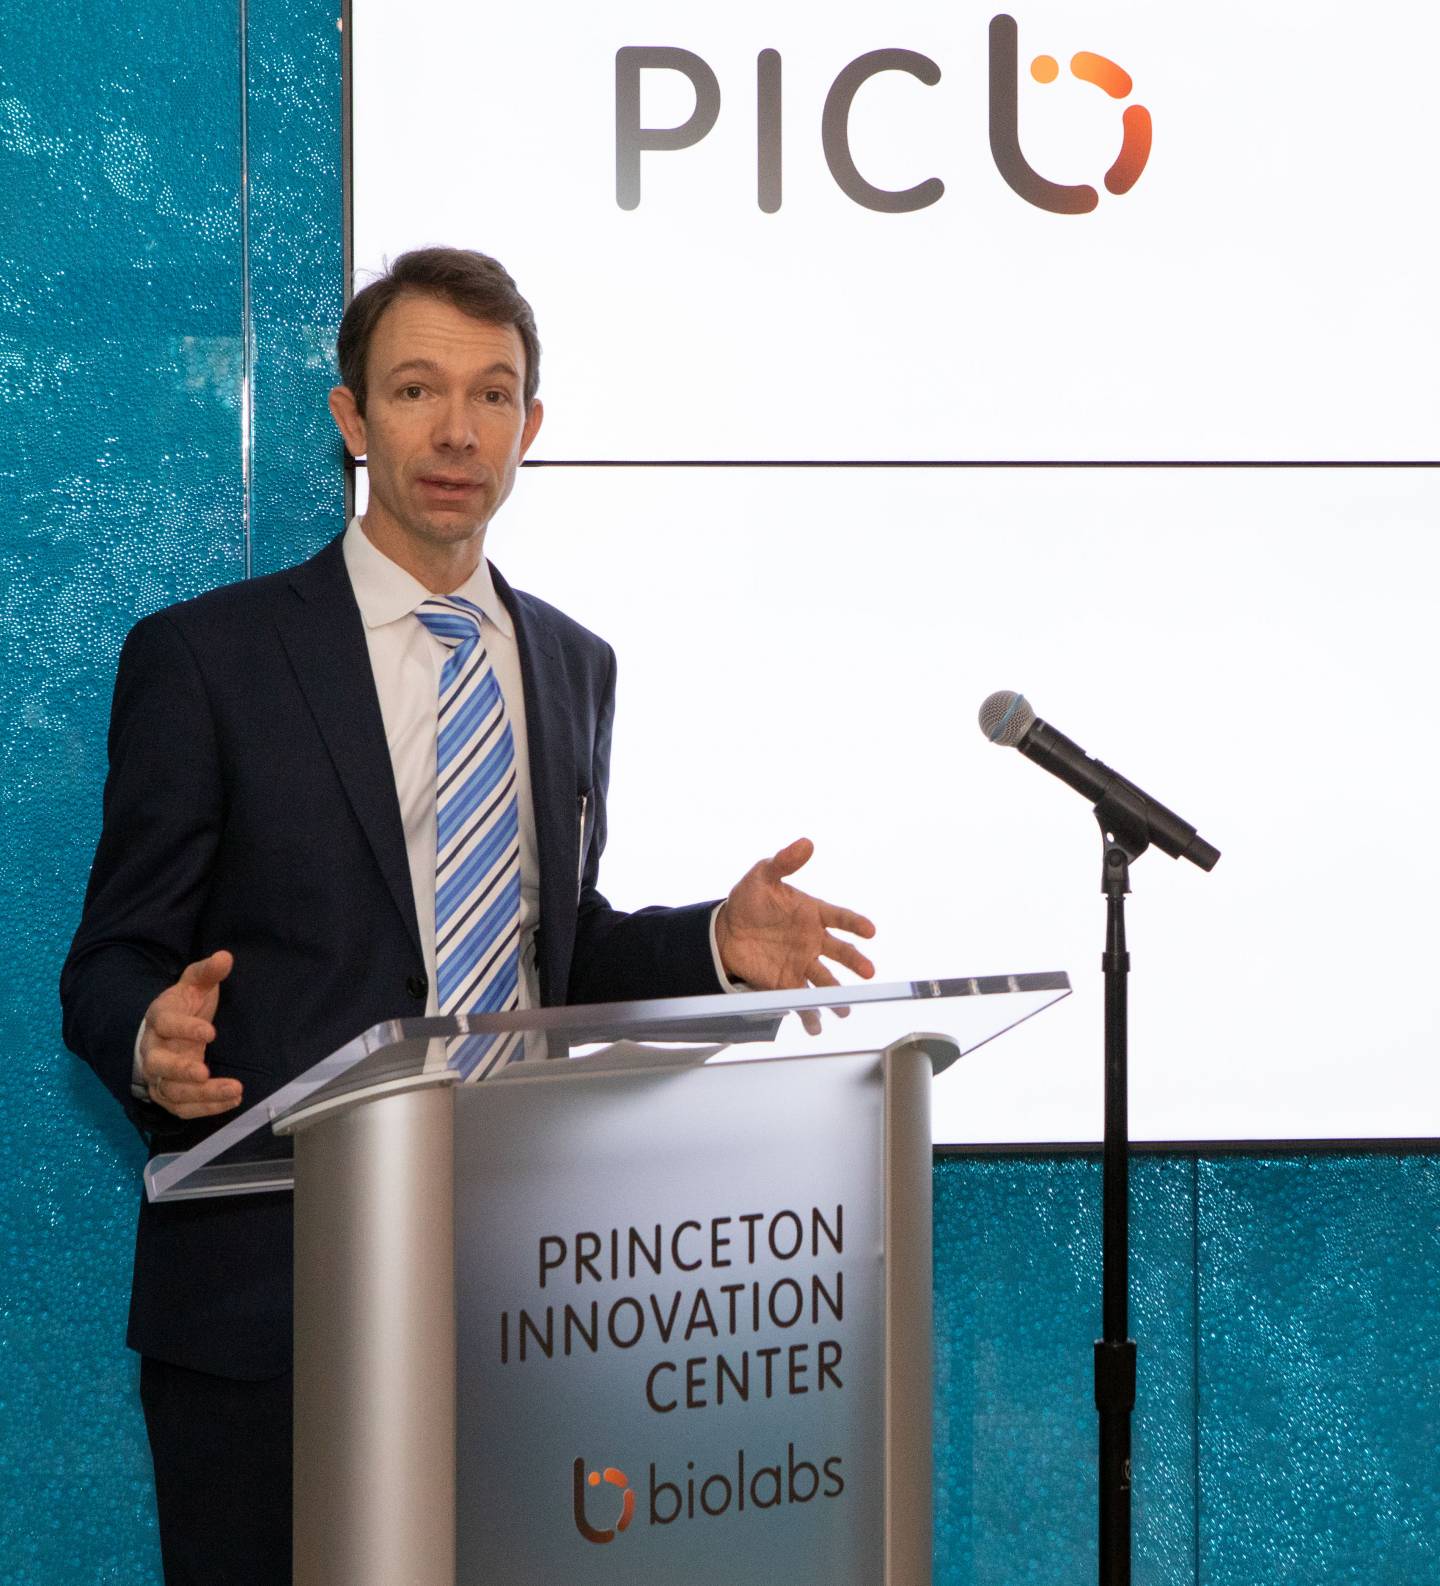 Johannes Fruehauff speaking at Princeton Innovation Center BioLabs opening ceremony